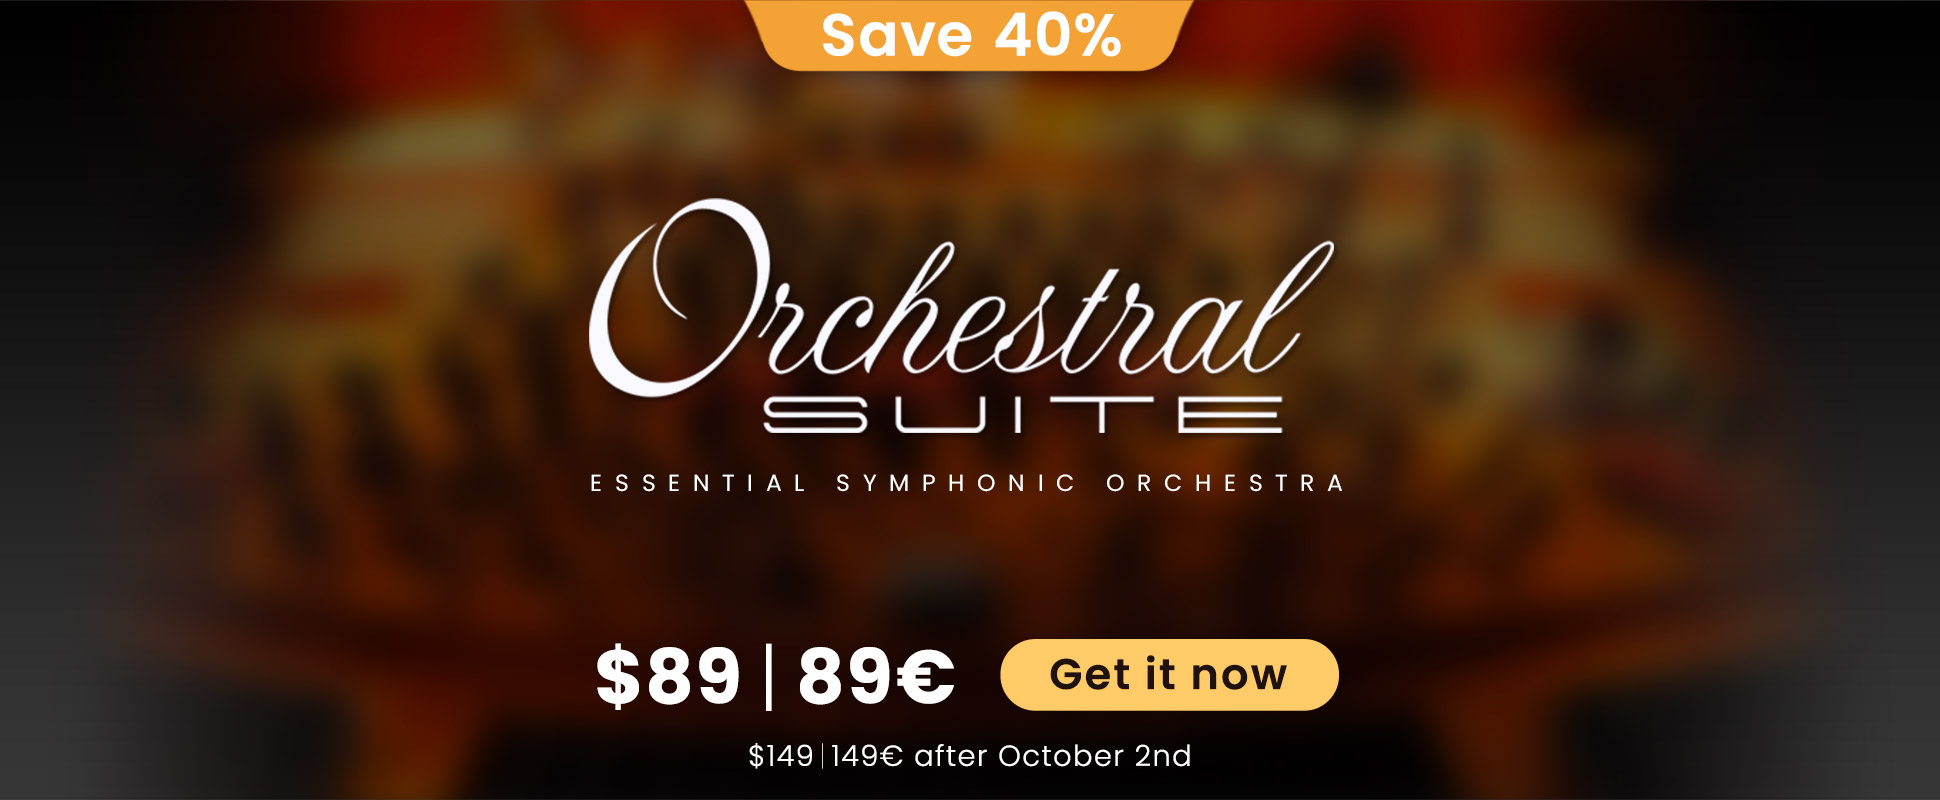 Orchestral Suite